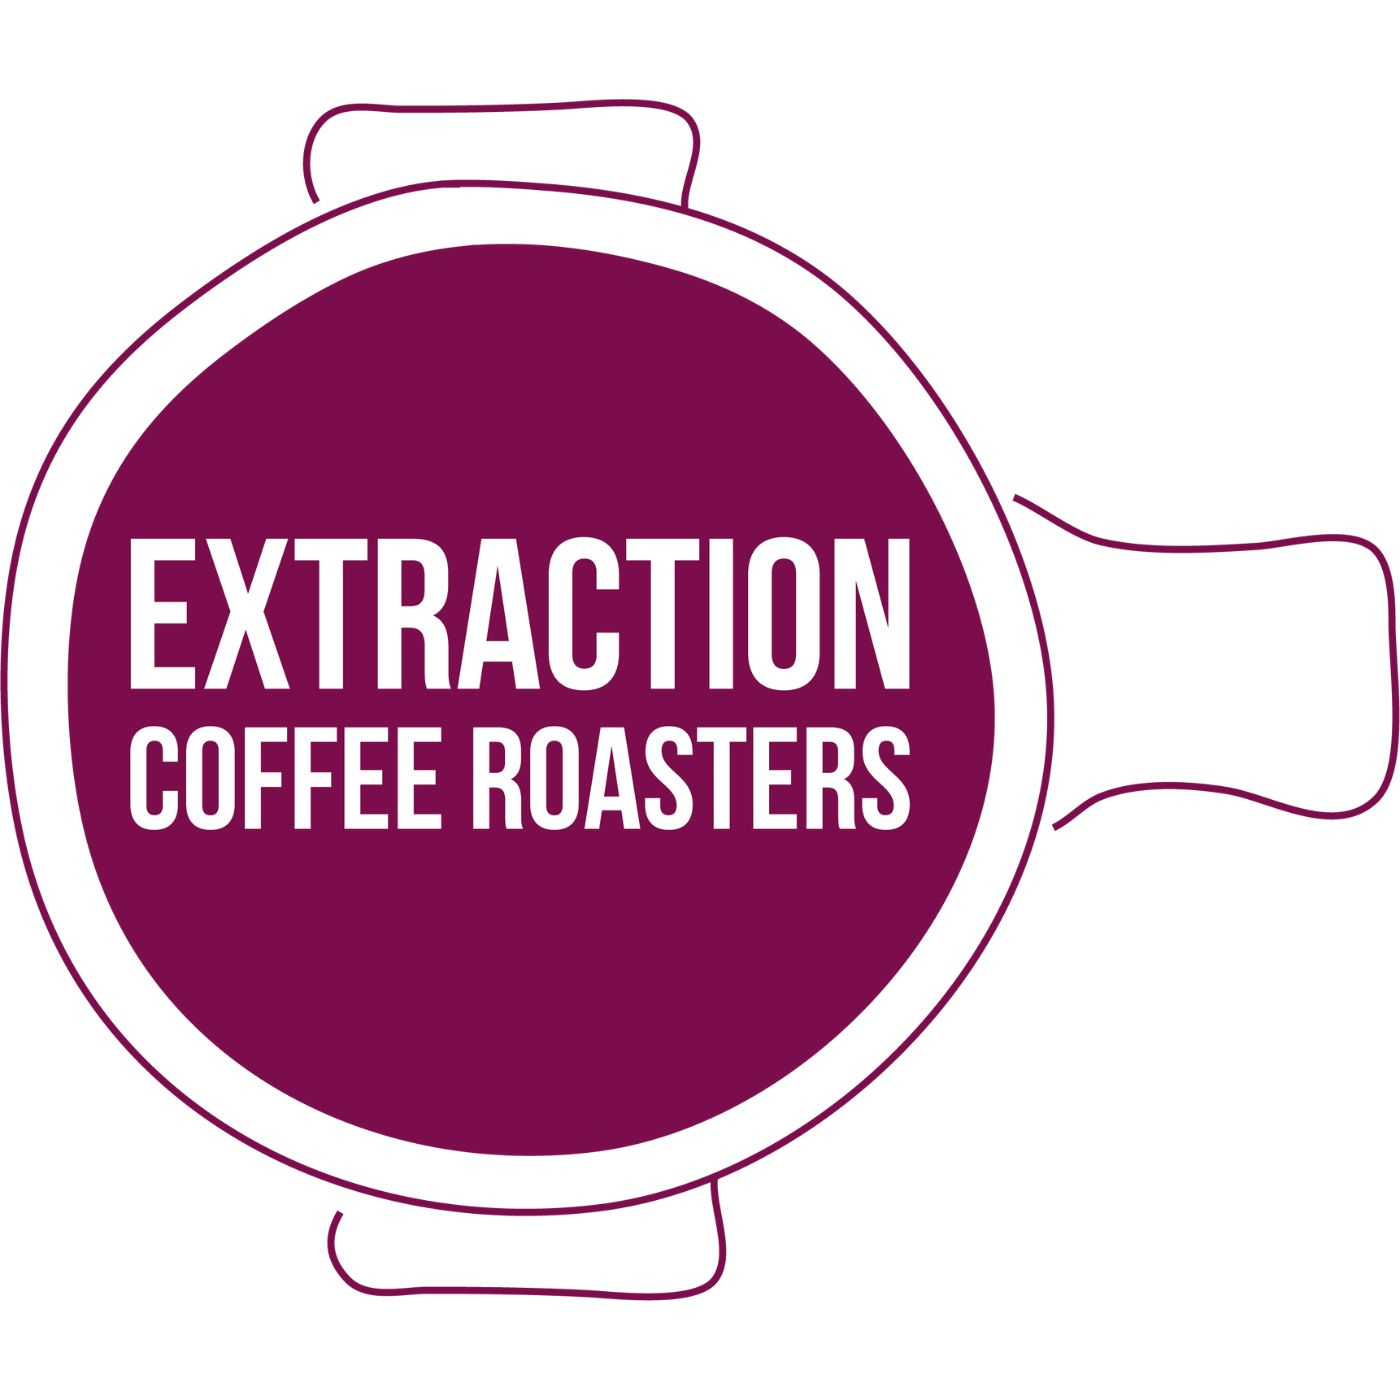 Extraction Artisan Coffee